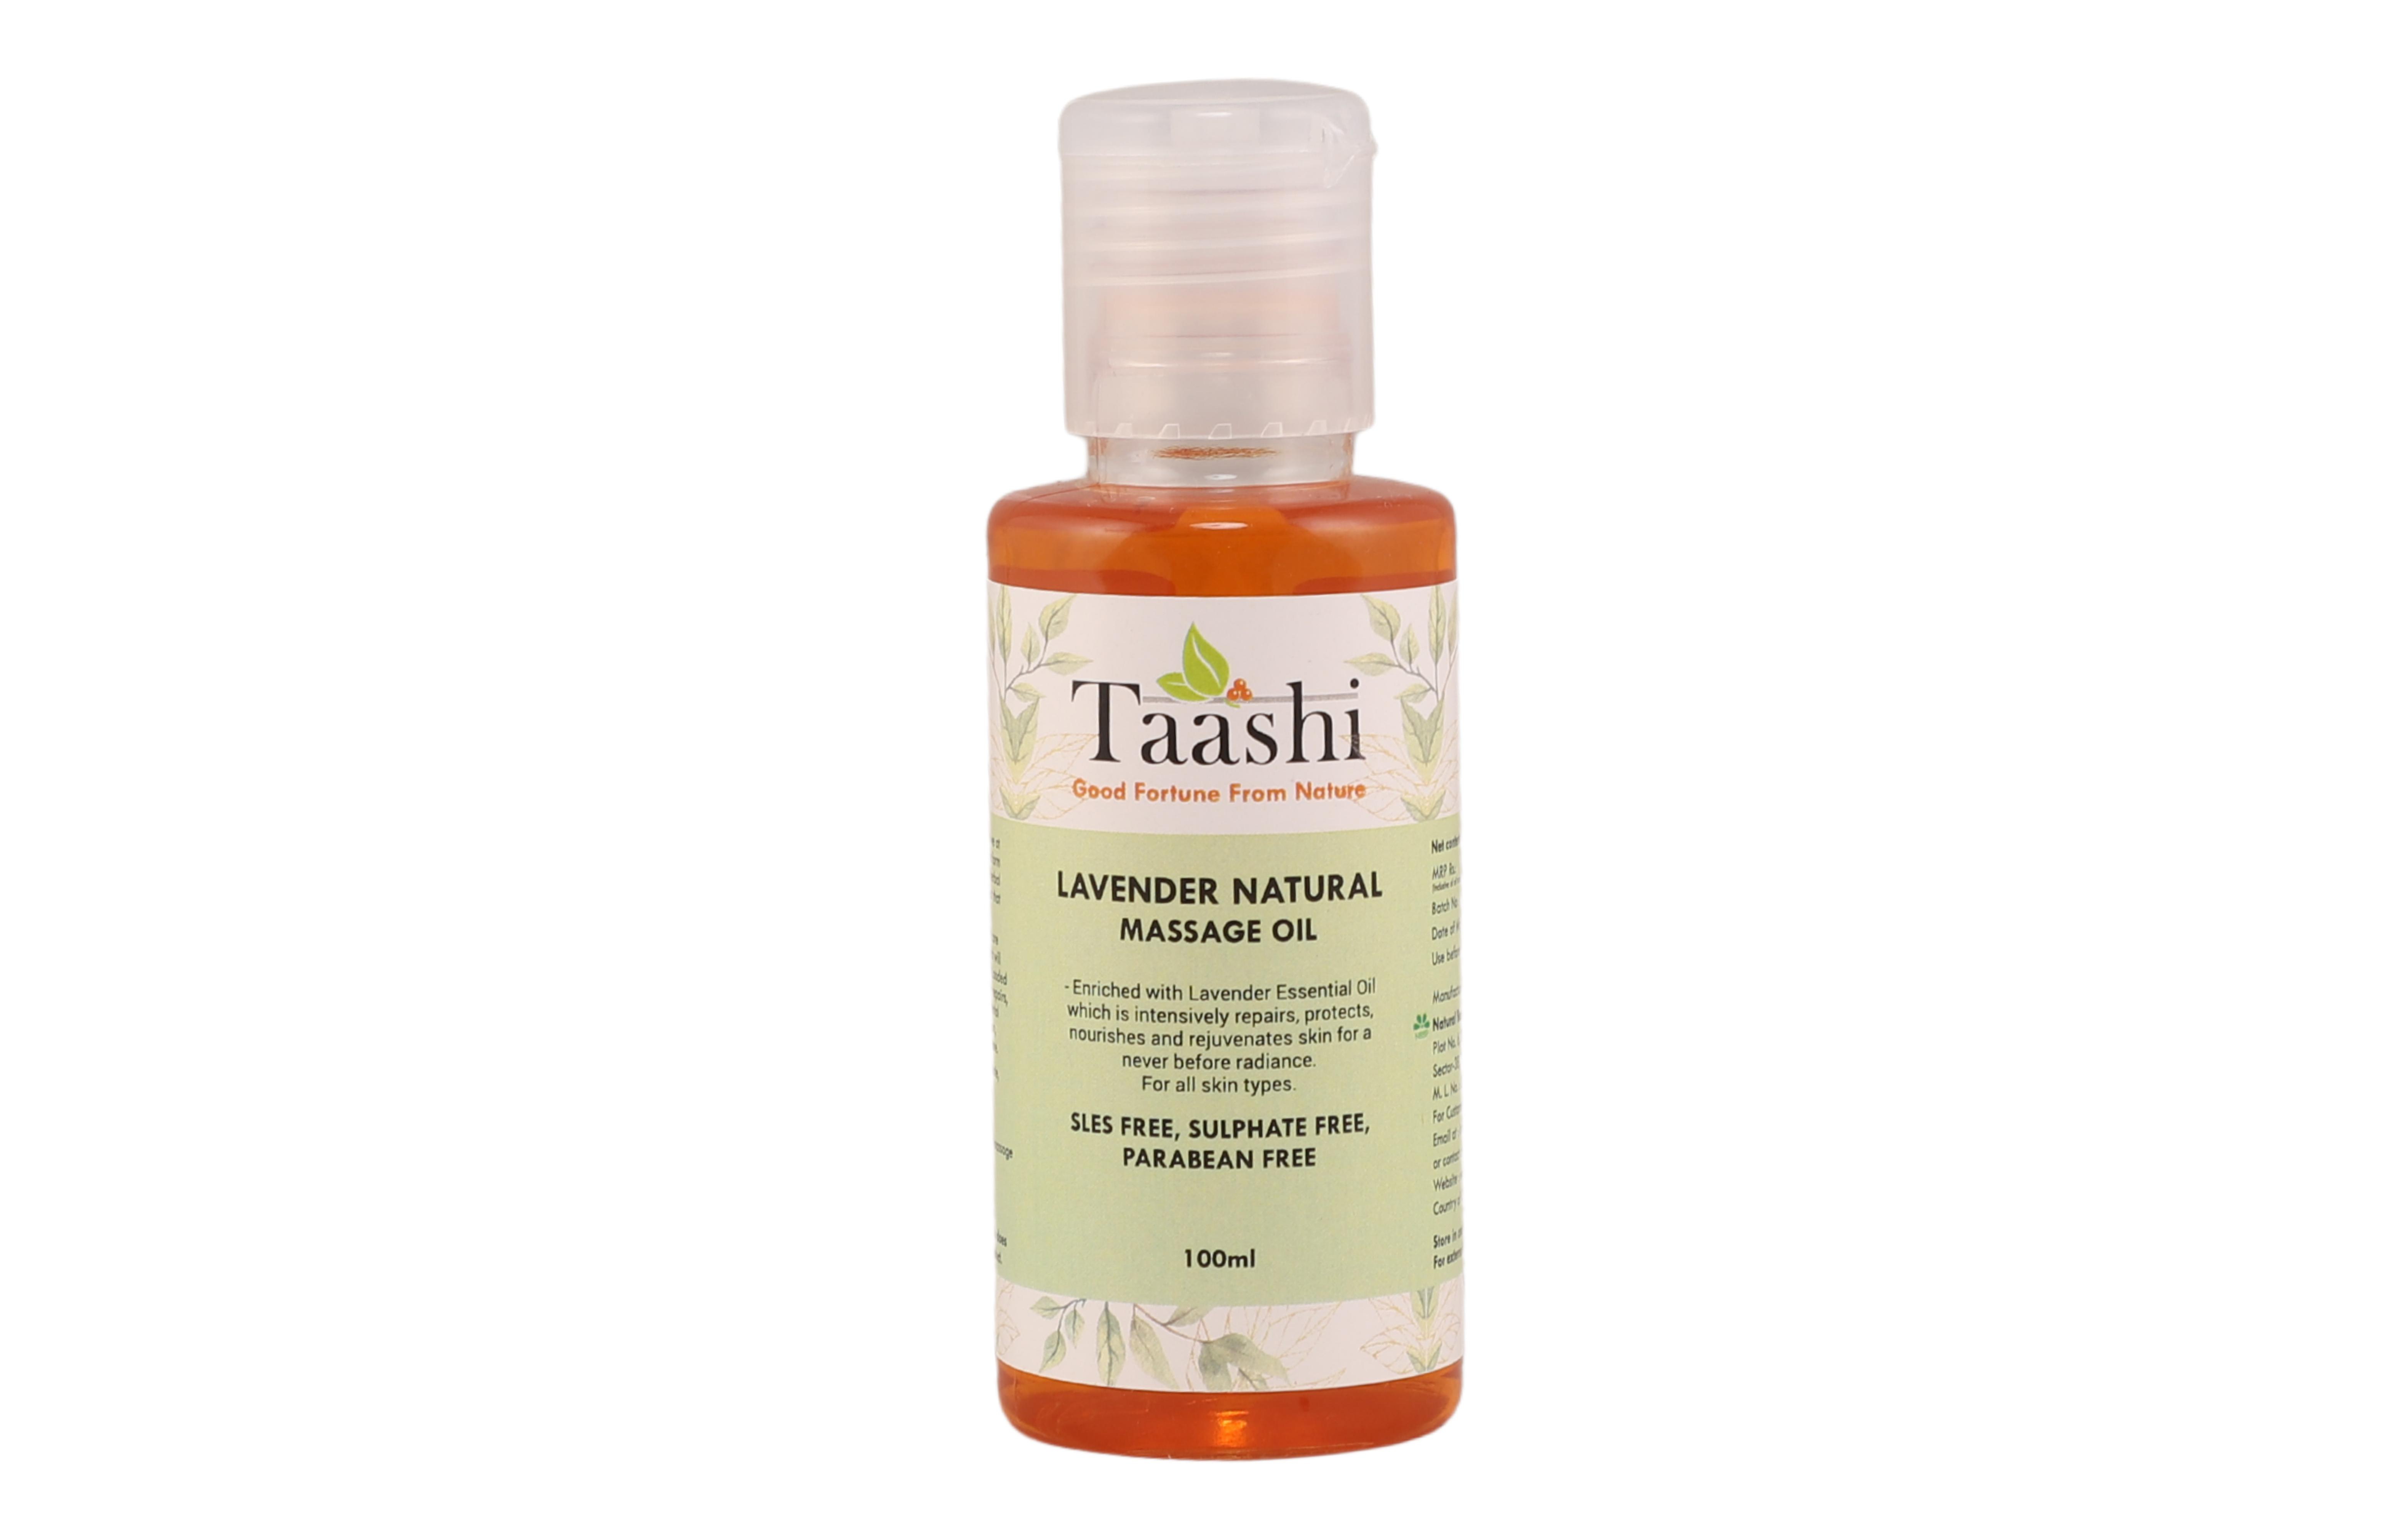 Taashi Lavender Natural Massage Oil- Nourishes and Rejuvenates Skin